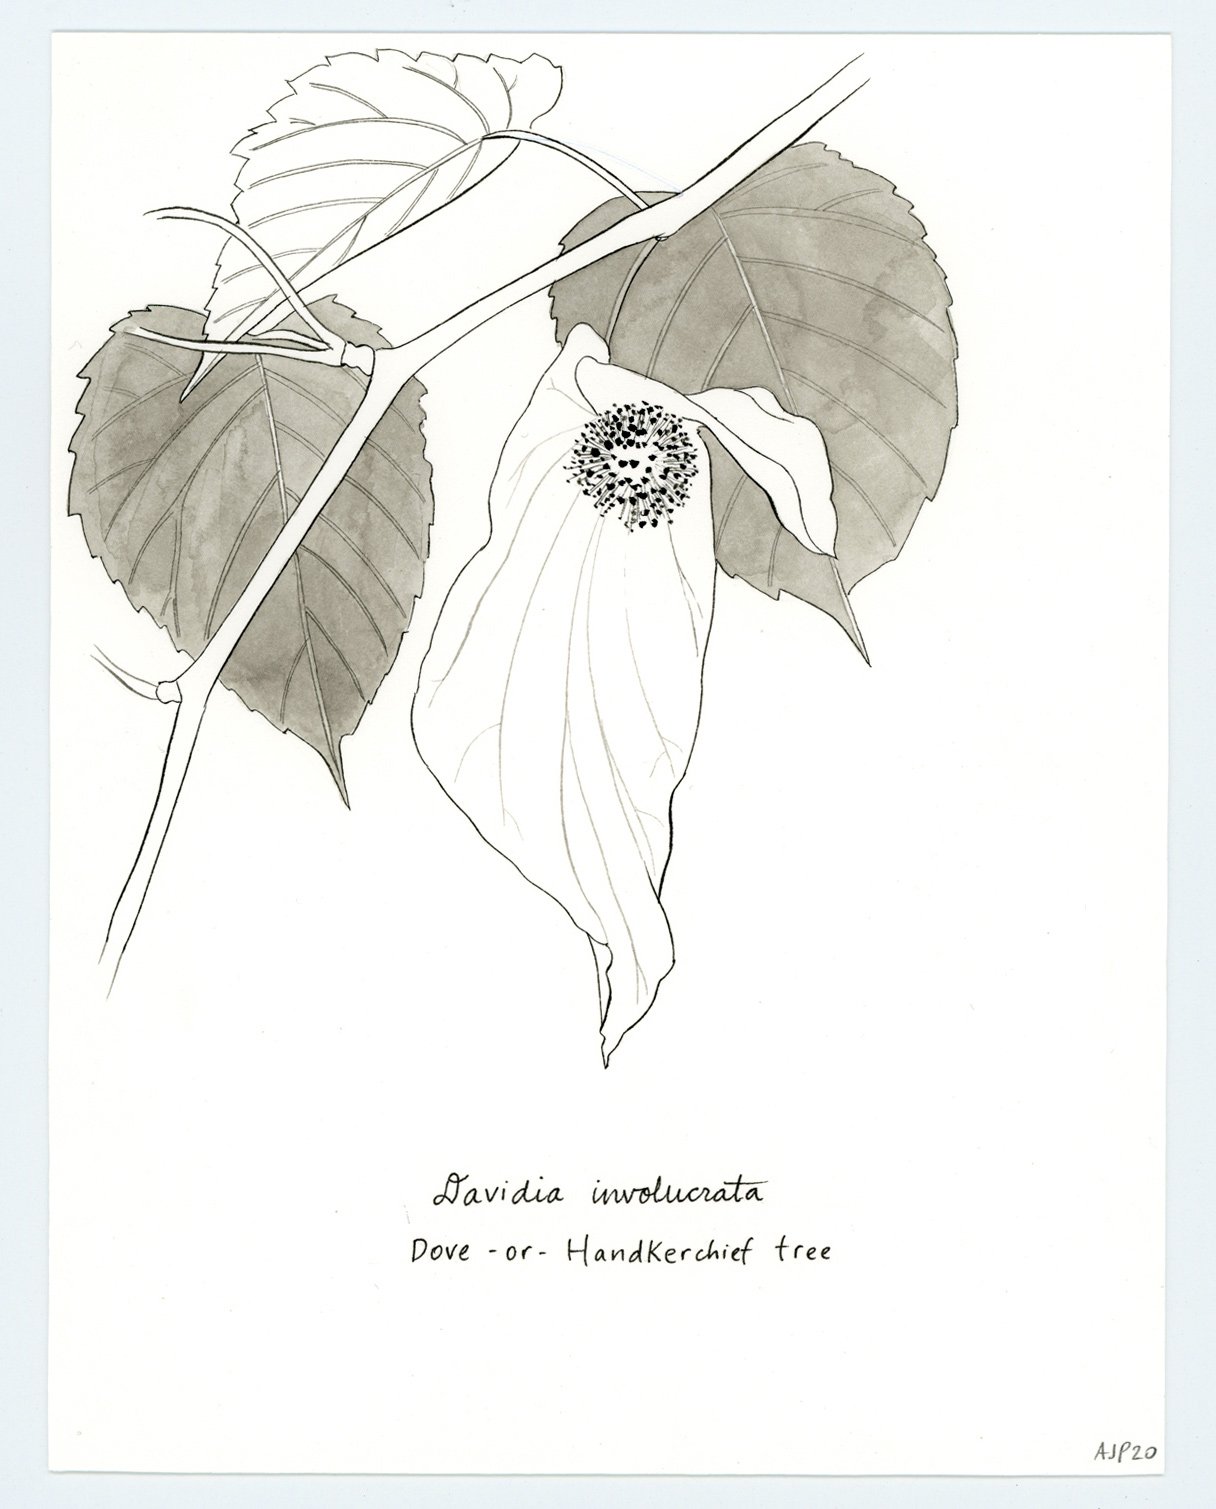 Davidia involucrata / Dove or Handkerchief tree